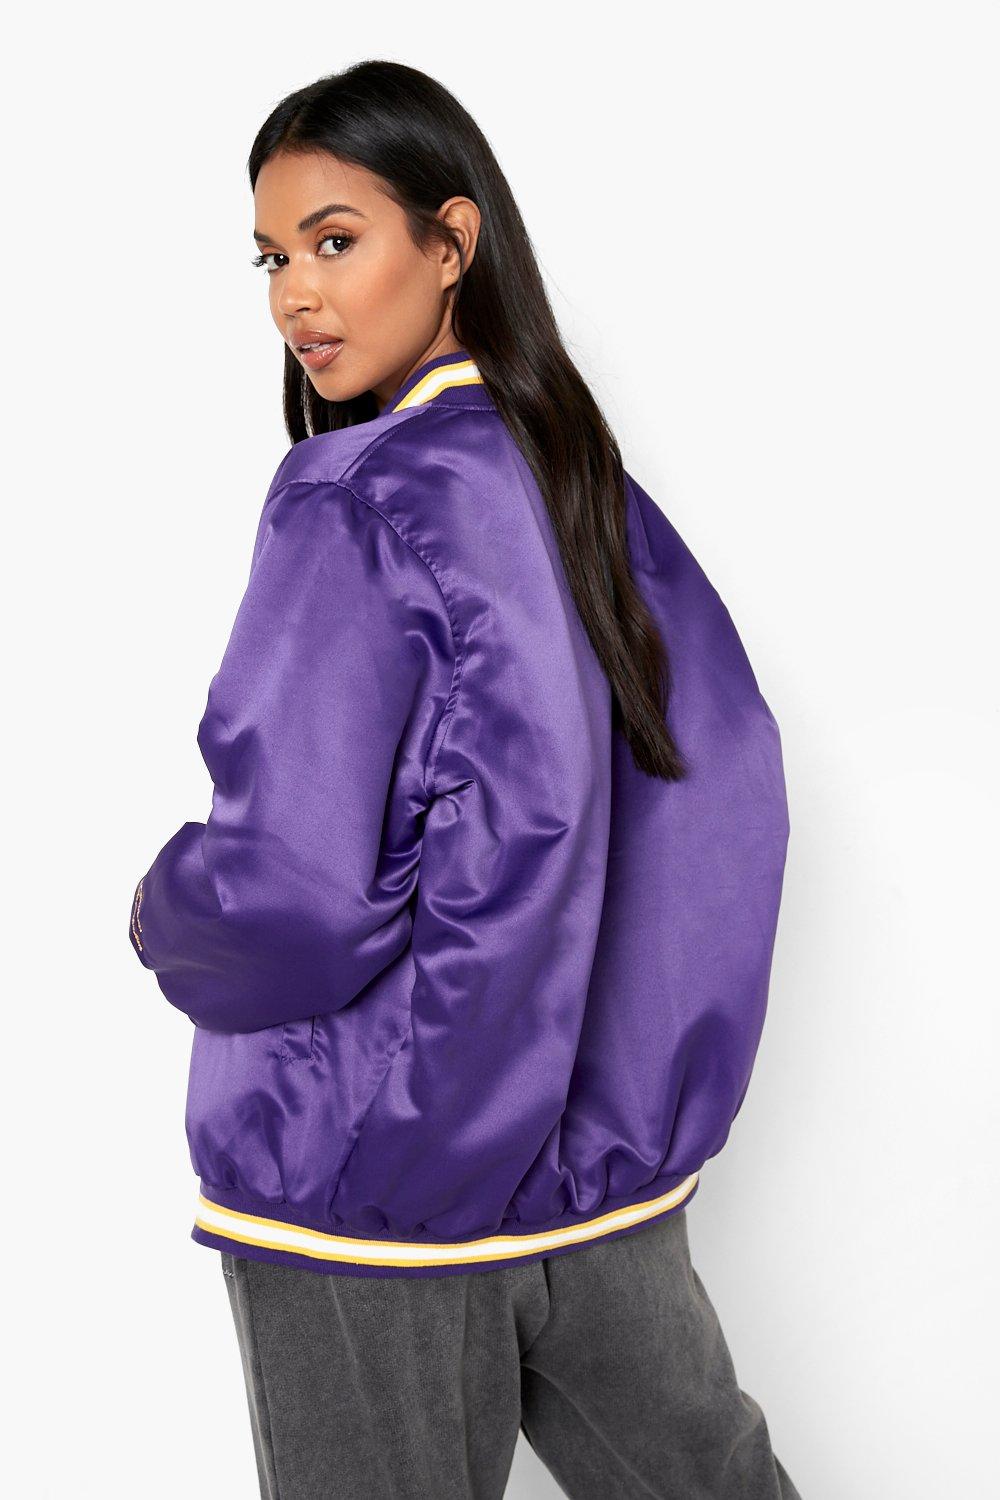 REORIAFEE Plus Size Jacket for Women Unisex Casual Streetwear Baseball  Bomber Jacket Fashion Long Sleeve Denim Jacket Purple XL 